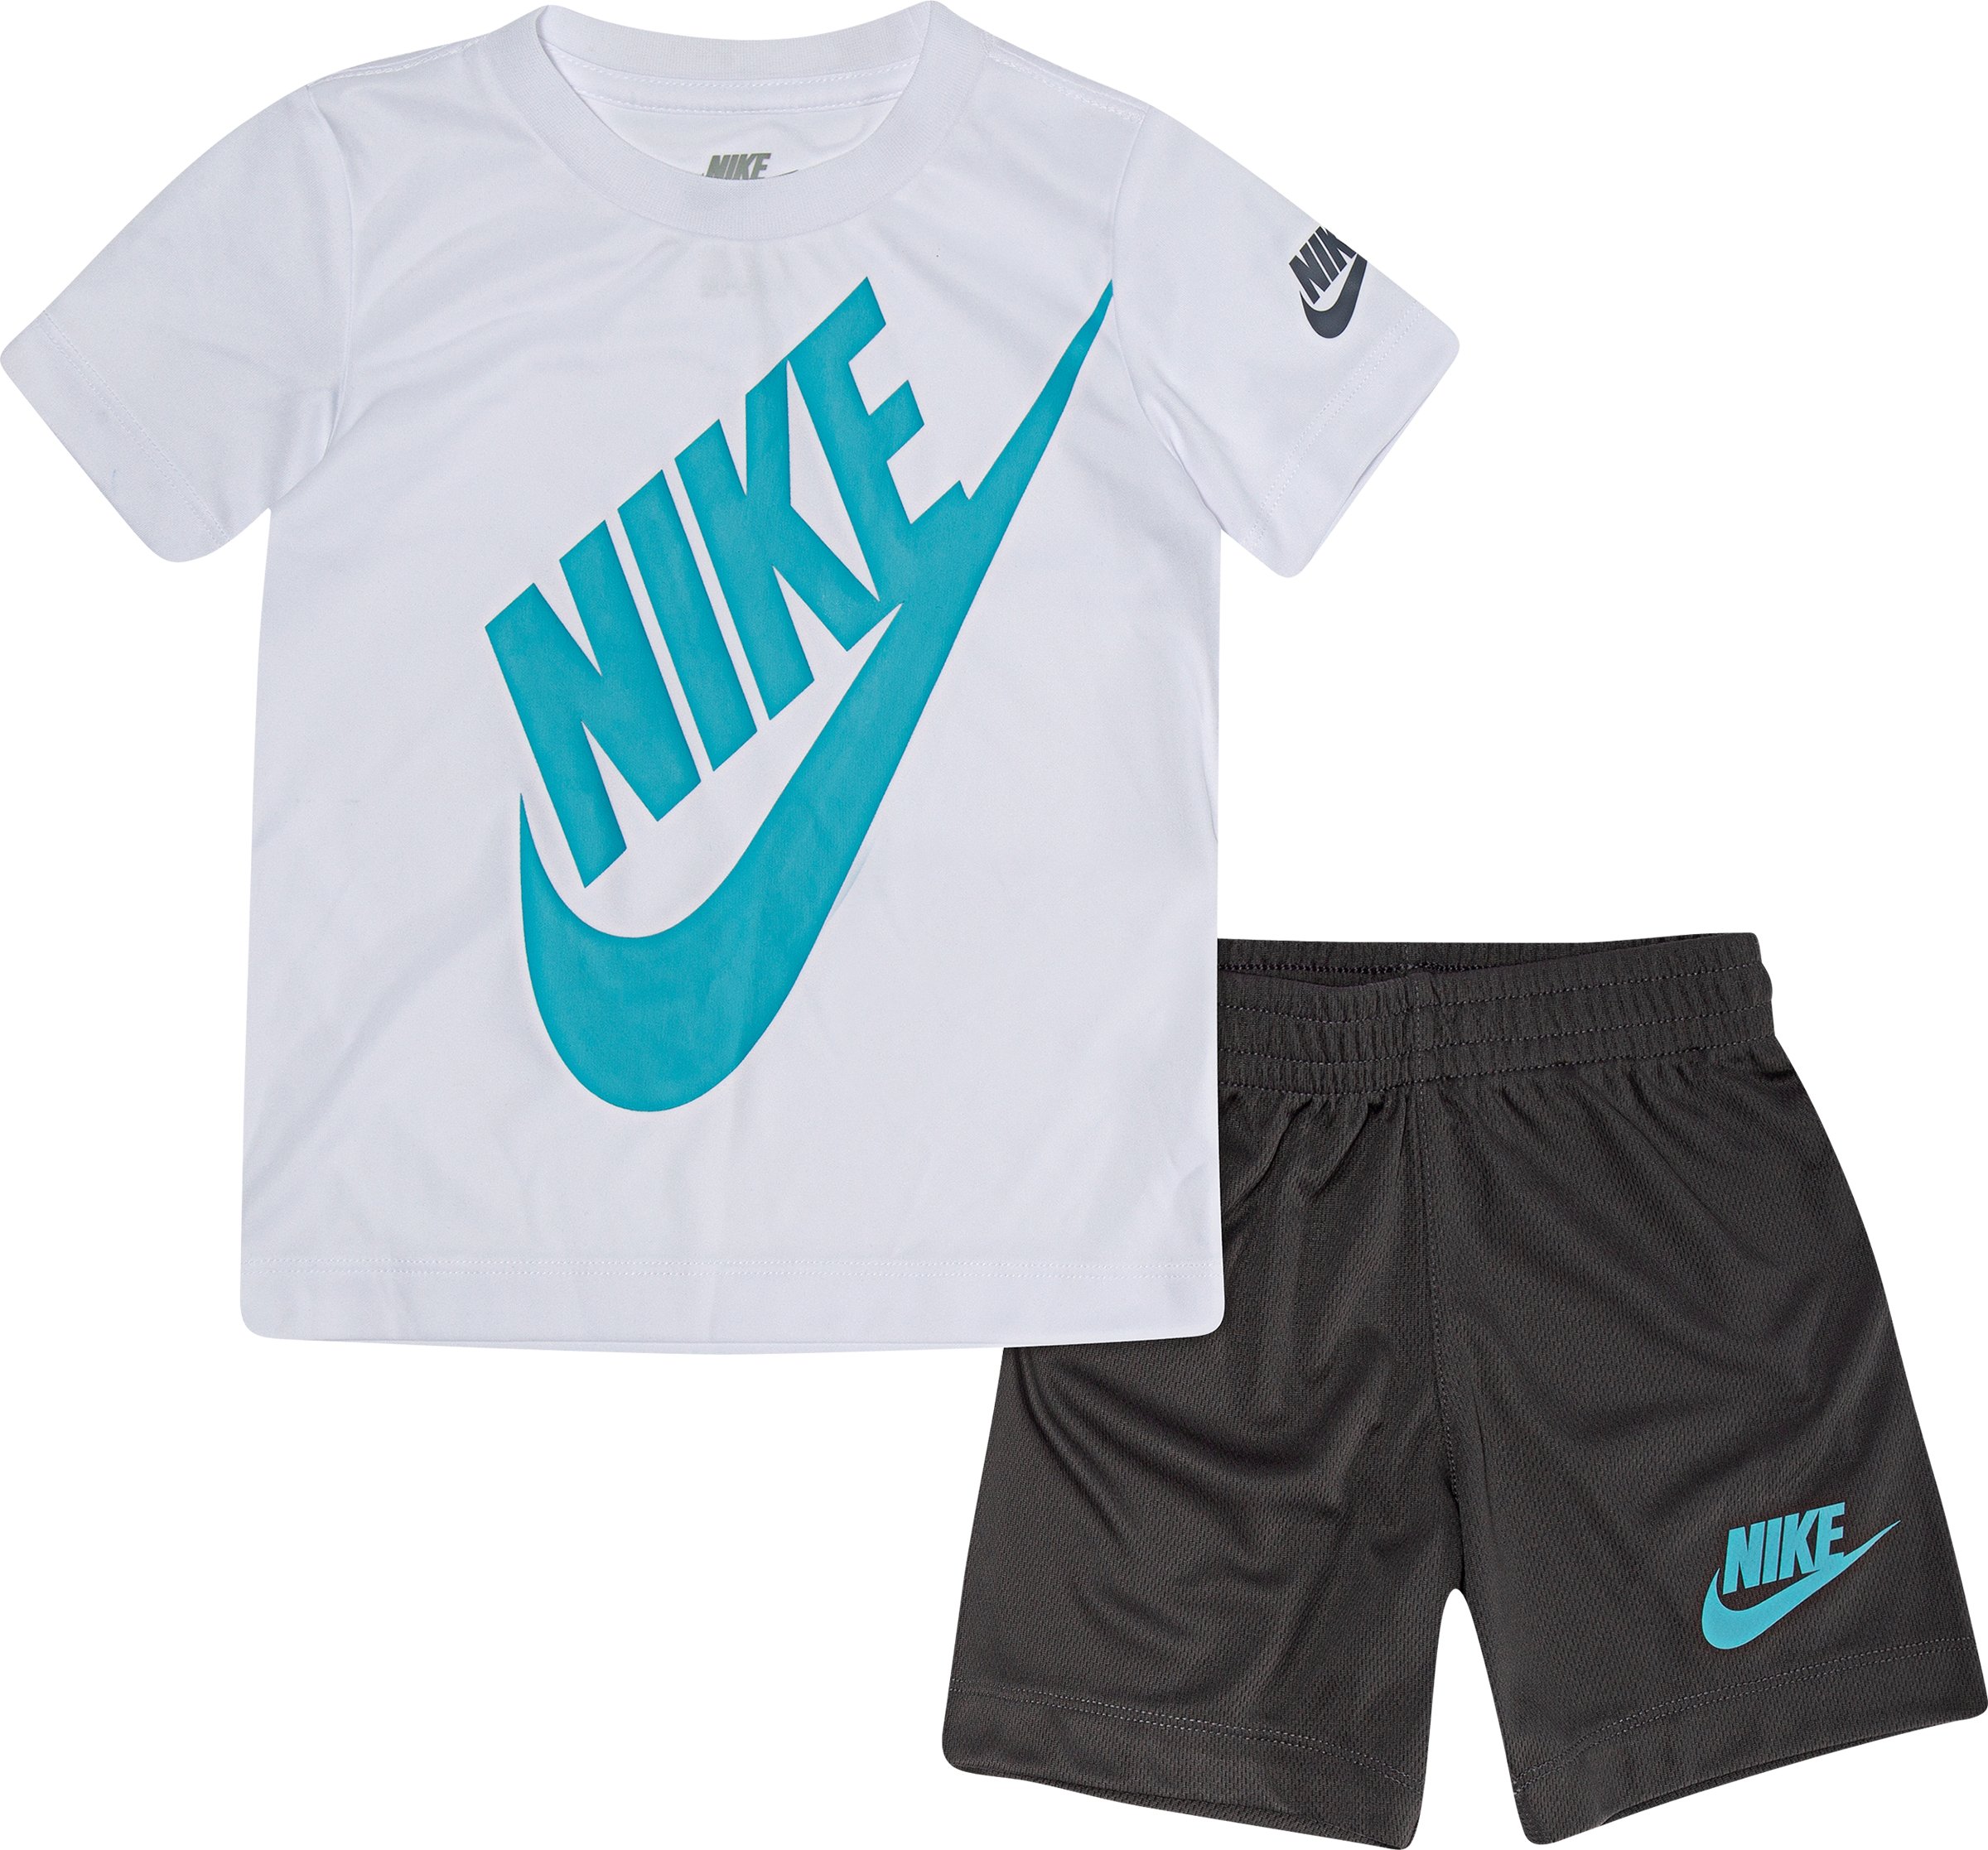 5t nike clothes Shop Nike Clothing 